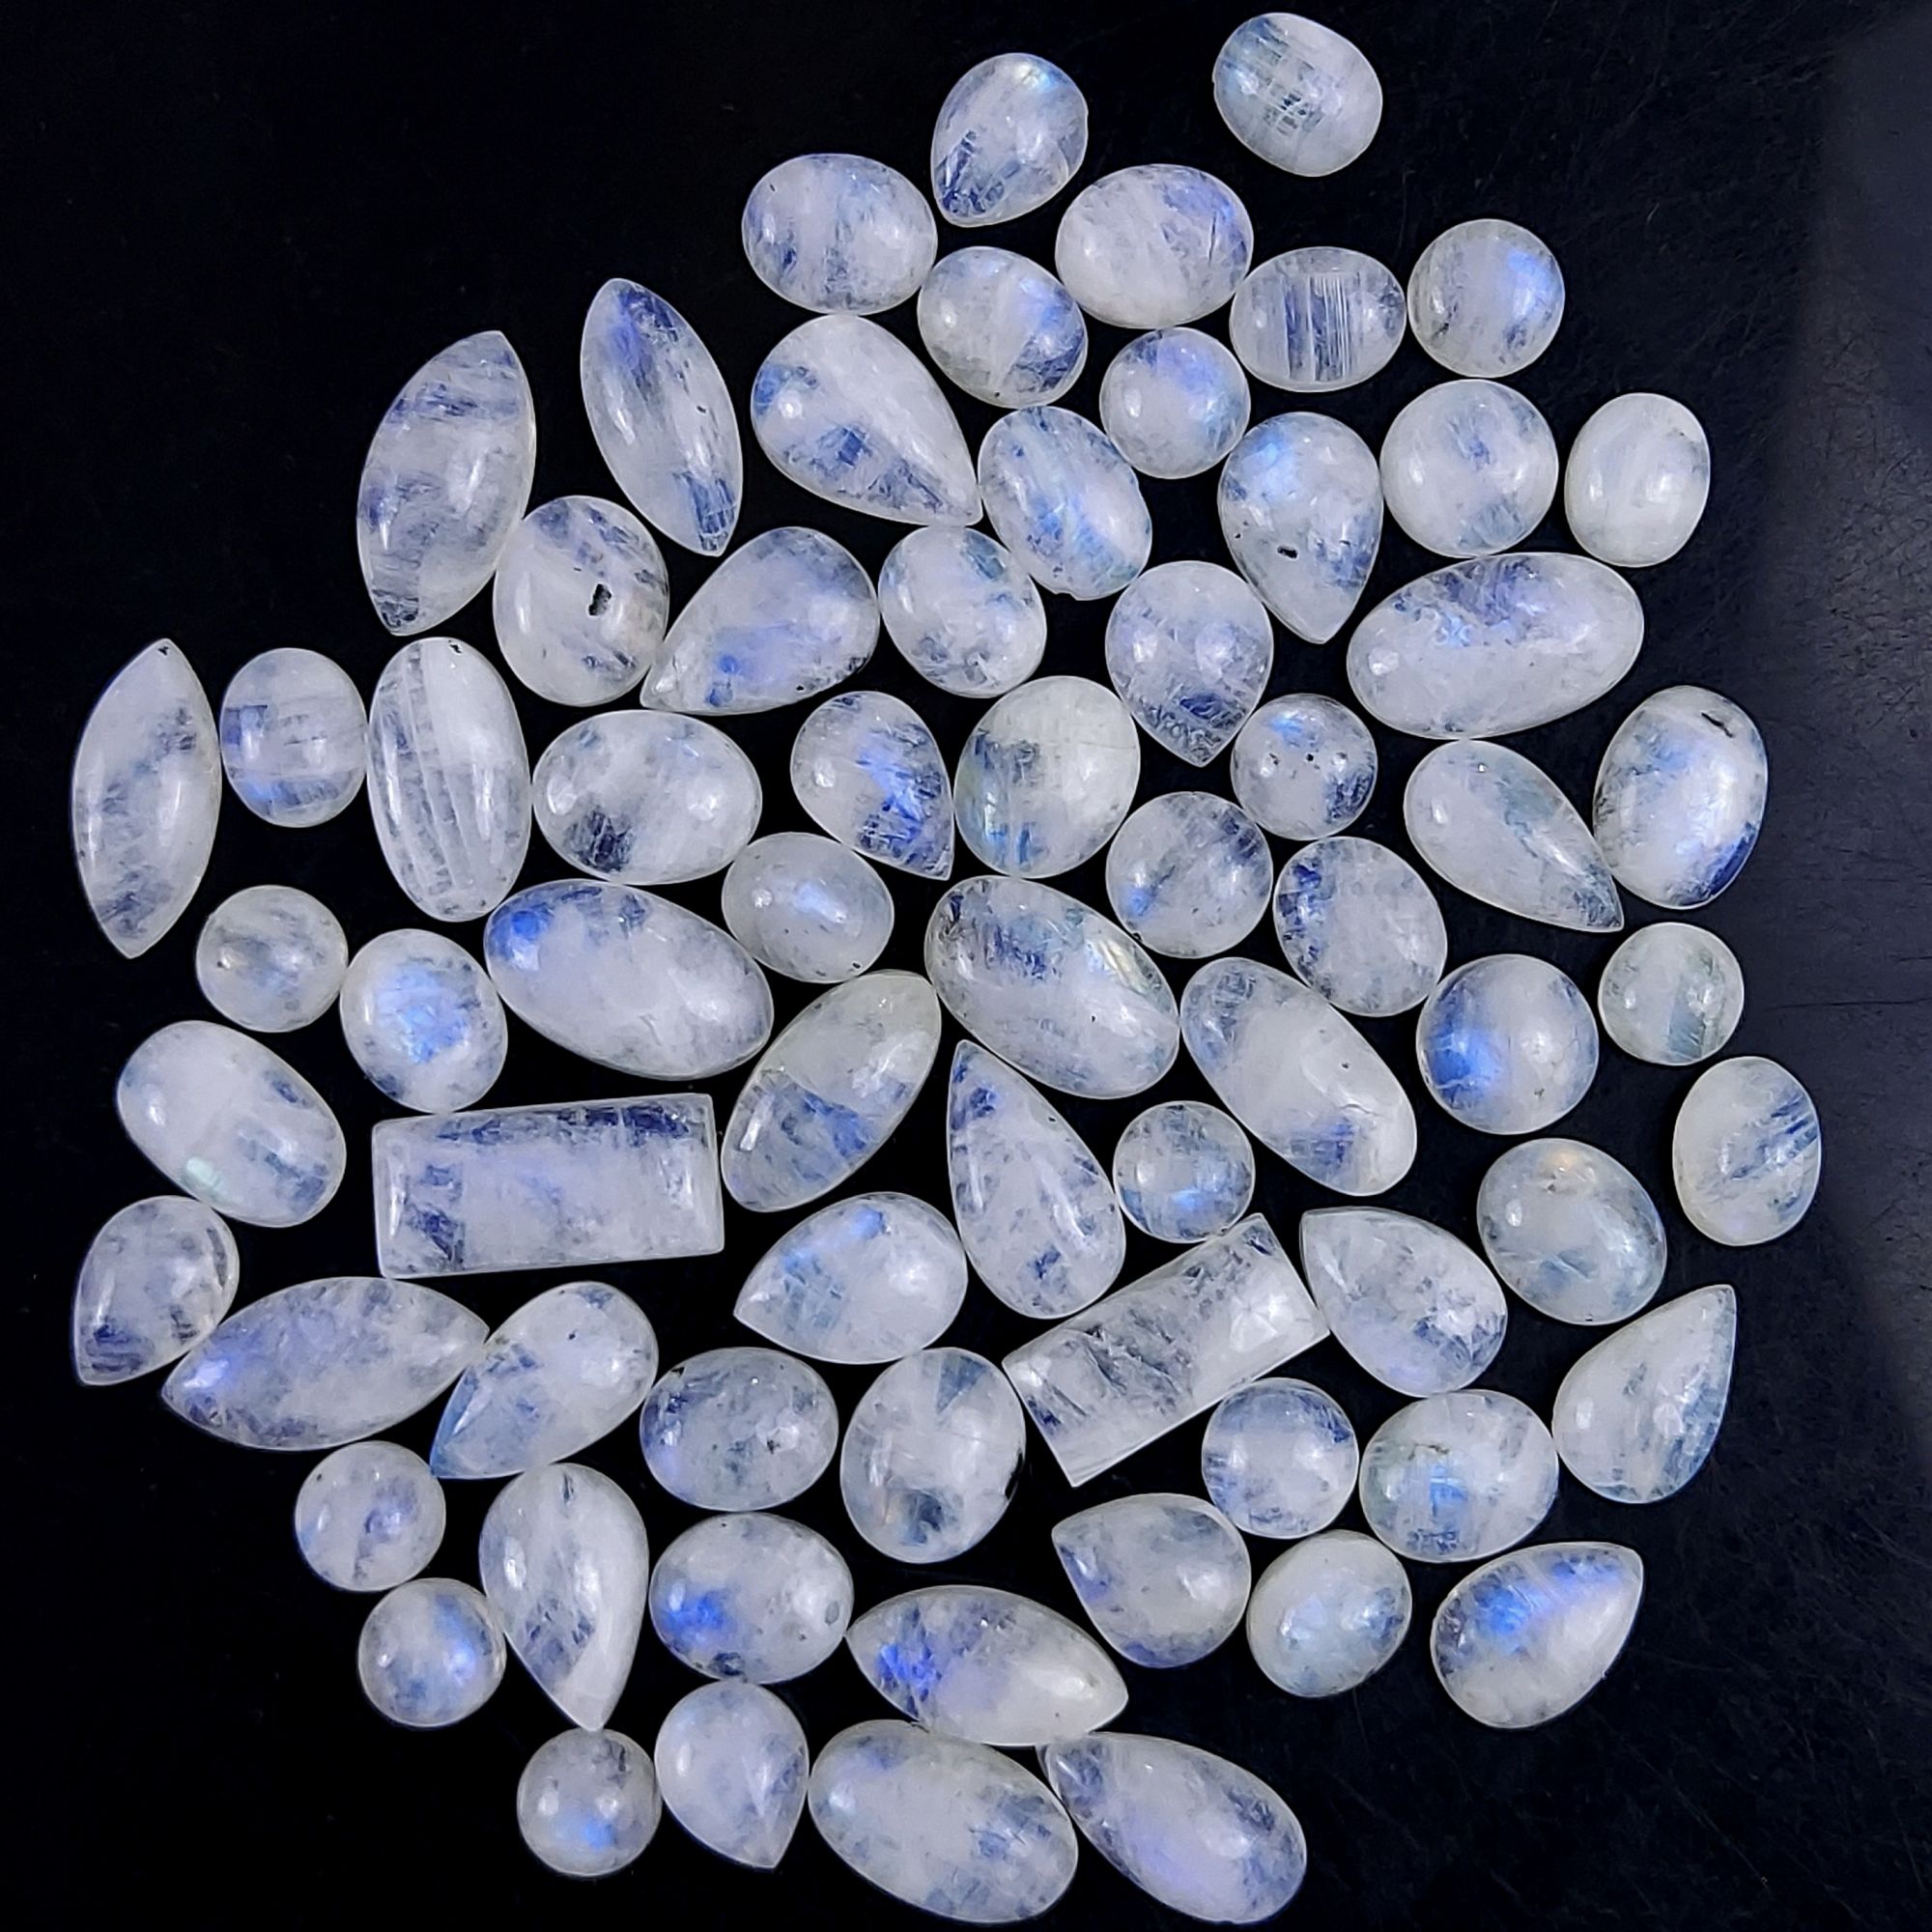 69Pcs 285Cts Natural Rainbow Cabochon Gemstone For Jewelry Making Crystal Cabochon Semi-Precious Rainbow Moonstone Flat Back Gemstone Lot 16x7 8x8mm#721